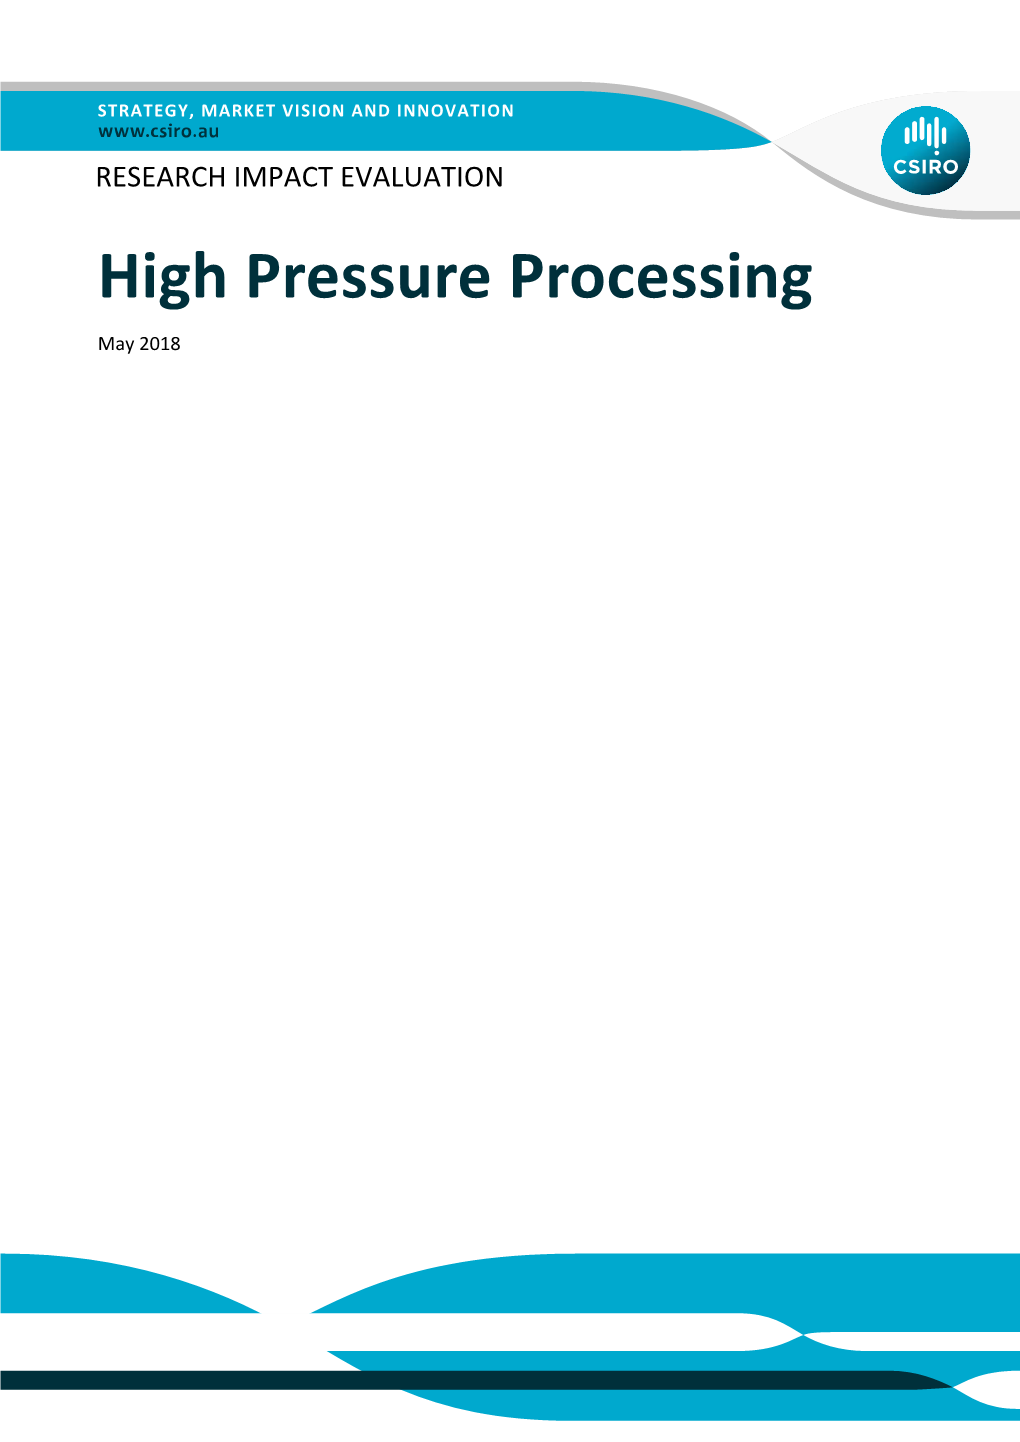 High Pressure Processing May 2018